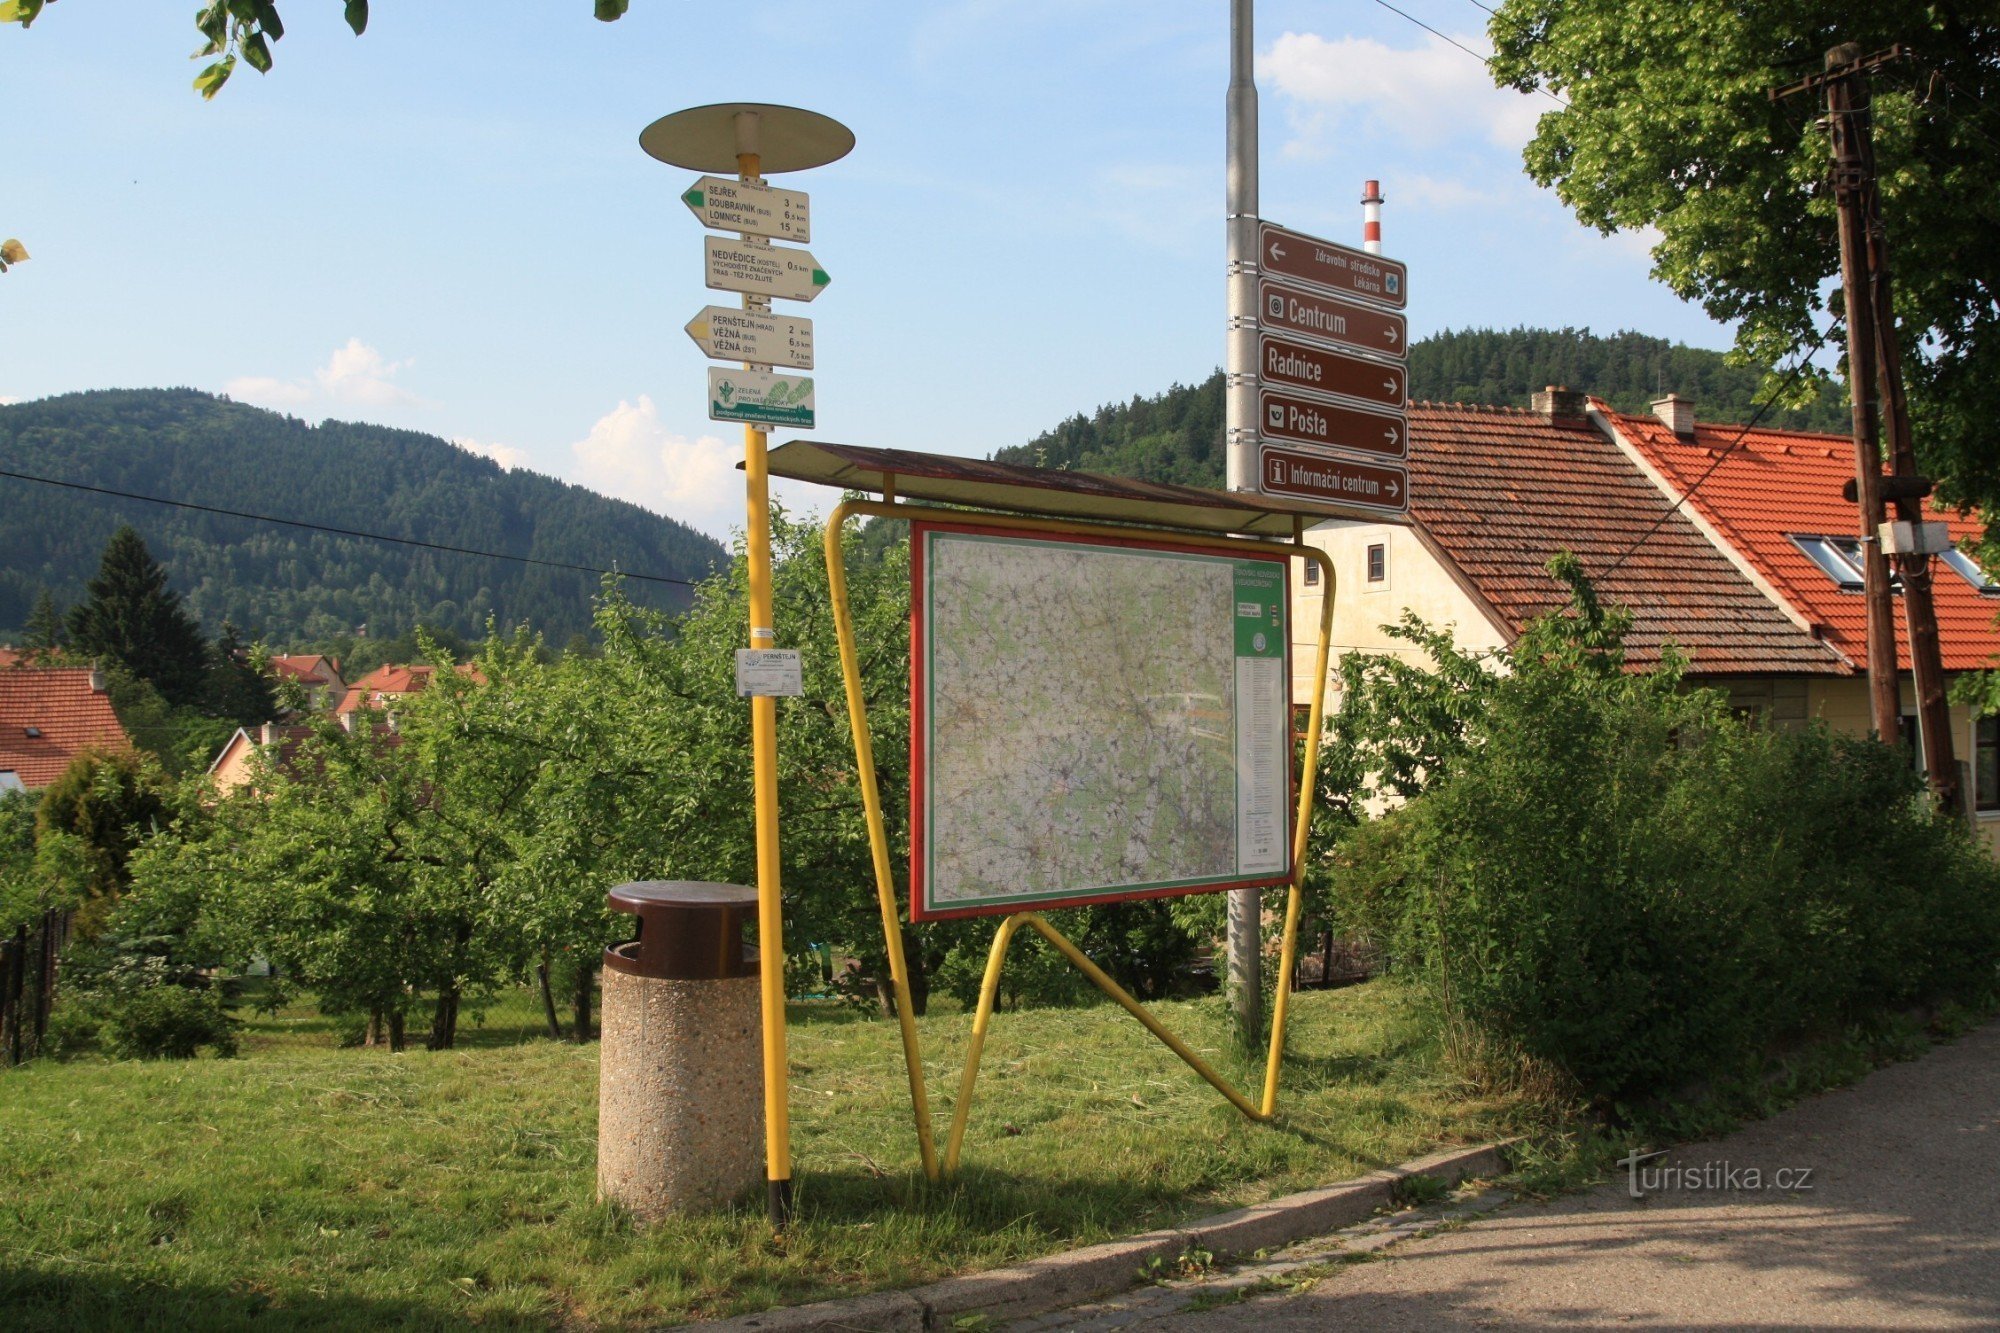 Nedvědice - tourist crossroads near the railway station